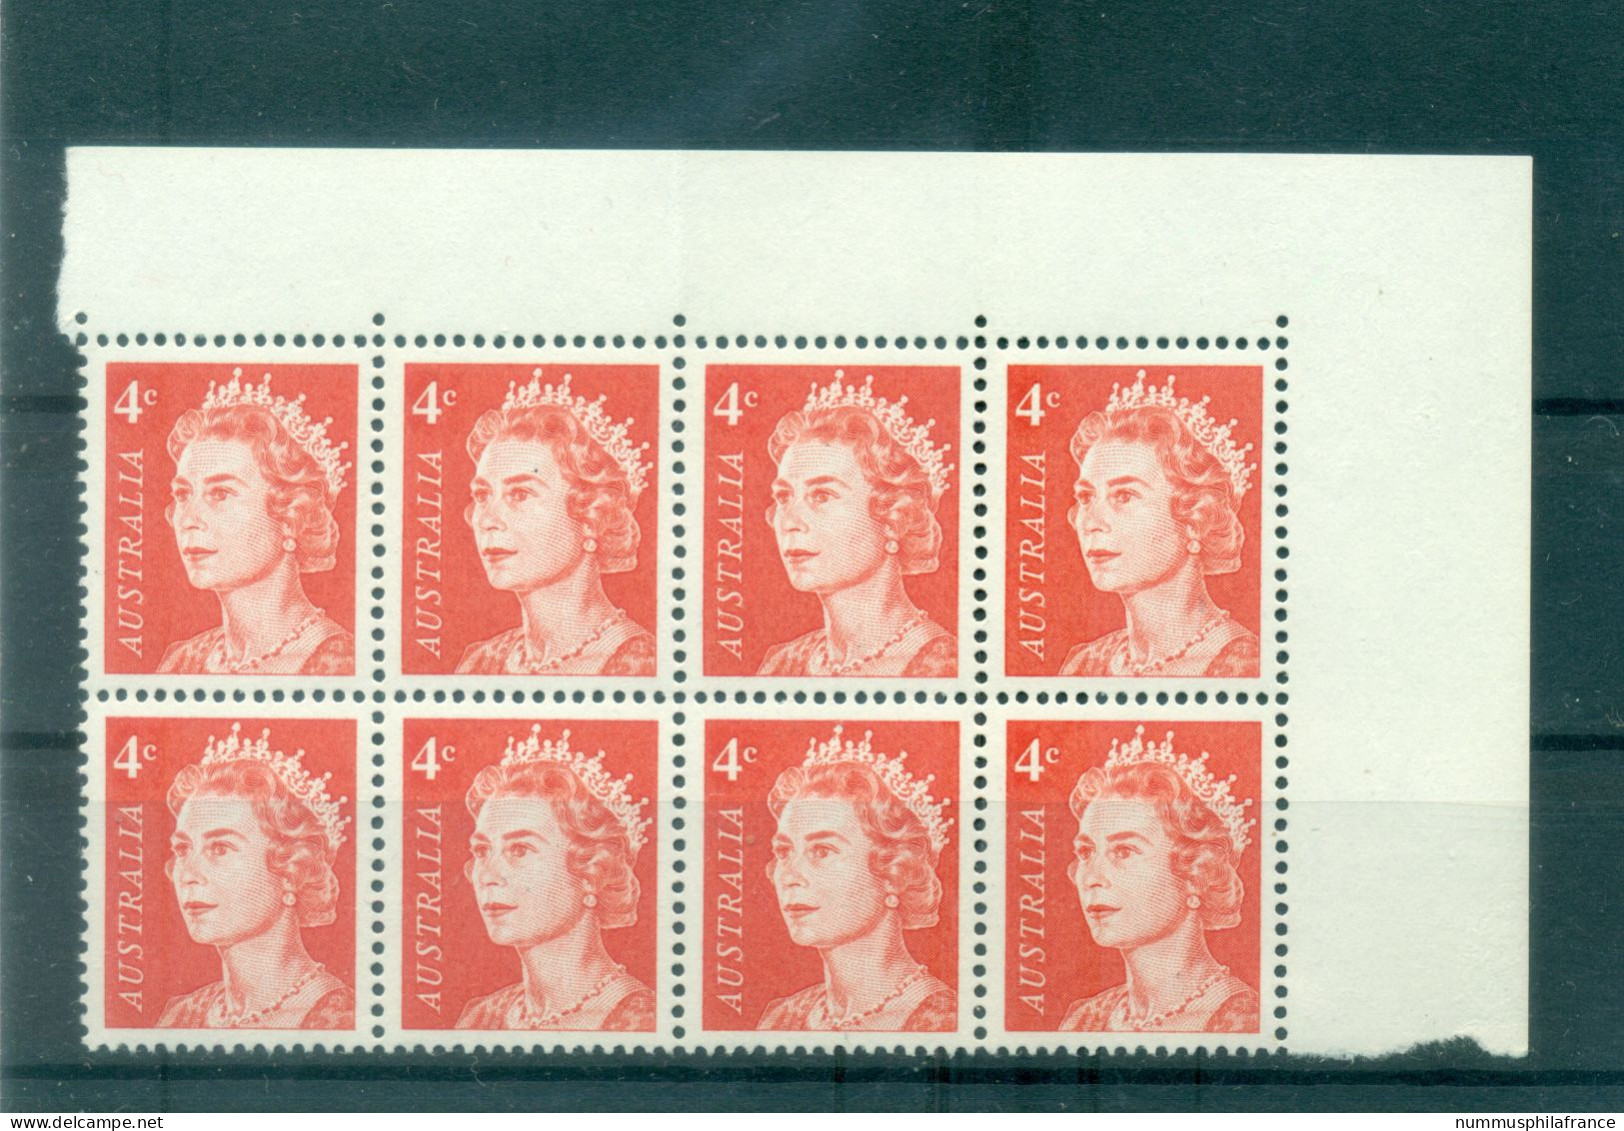 Australie 1966-70 - Y & T N. 322 - Série Courante (Michel N. 361 A) - Neufs